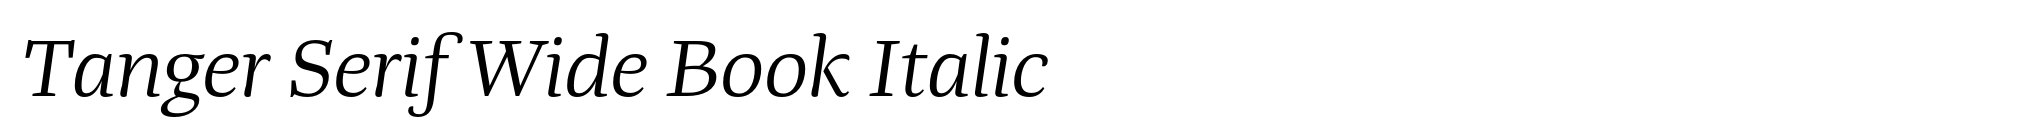 Tanger Serif Wide Book Italic image